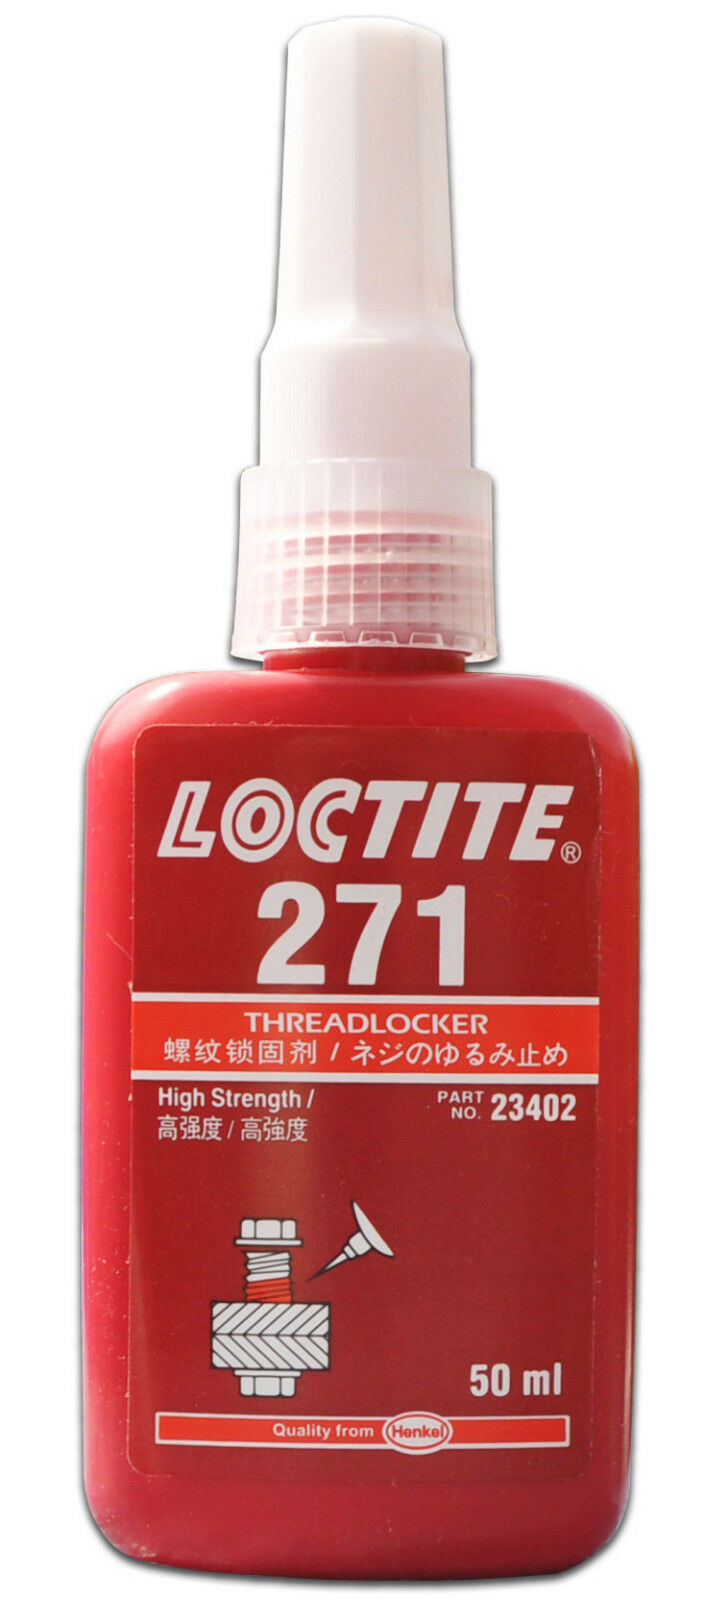 Loctite 271 High Strength - Threadlock - All Metal Adhesive - Glue 50 Ml